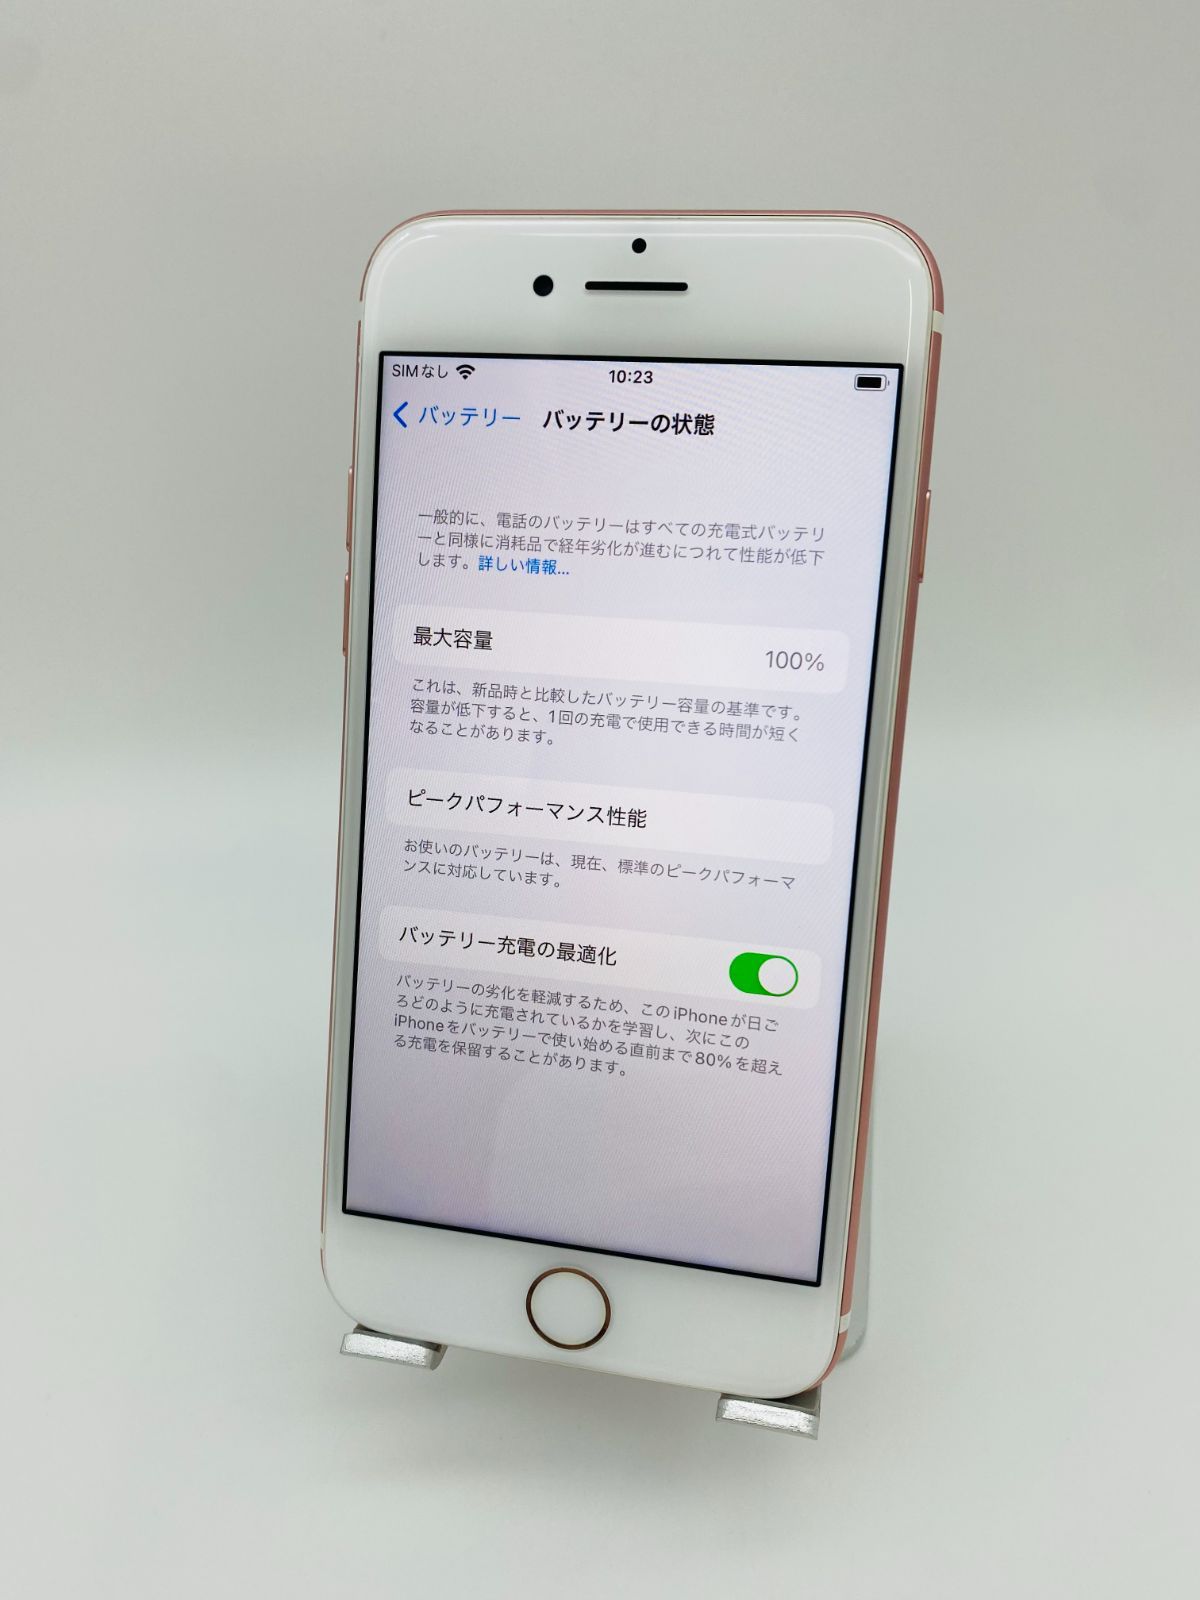 iPhone7 32GB ローズゴールド/シムフリー/大容量2300mAh 新品 